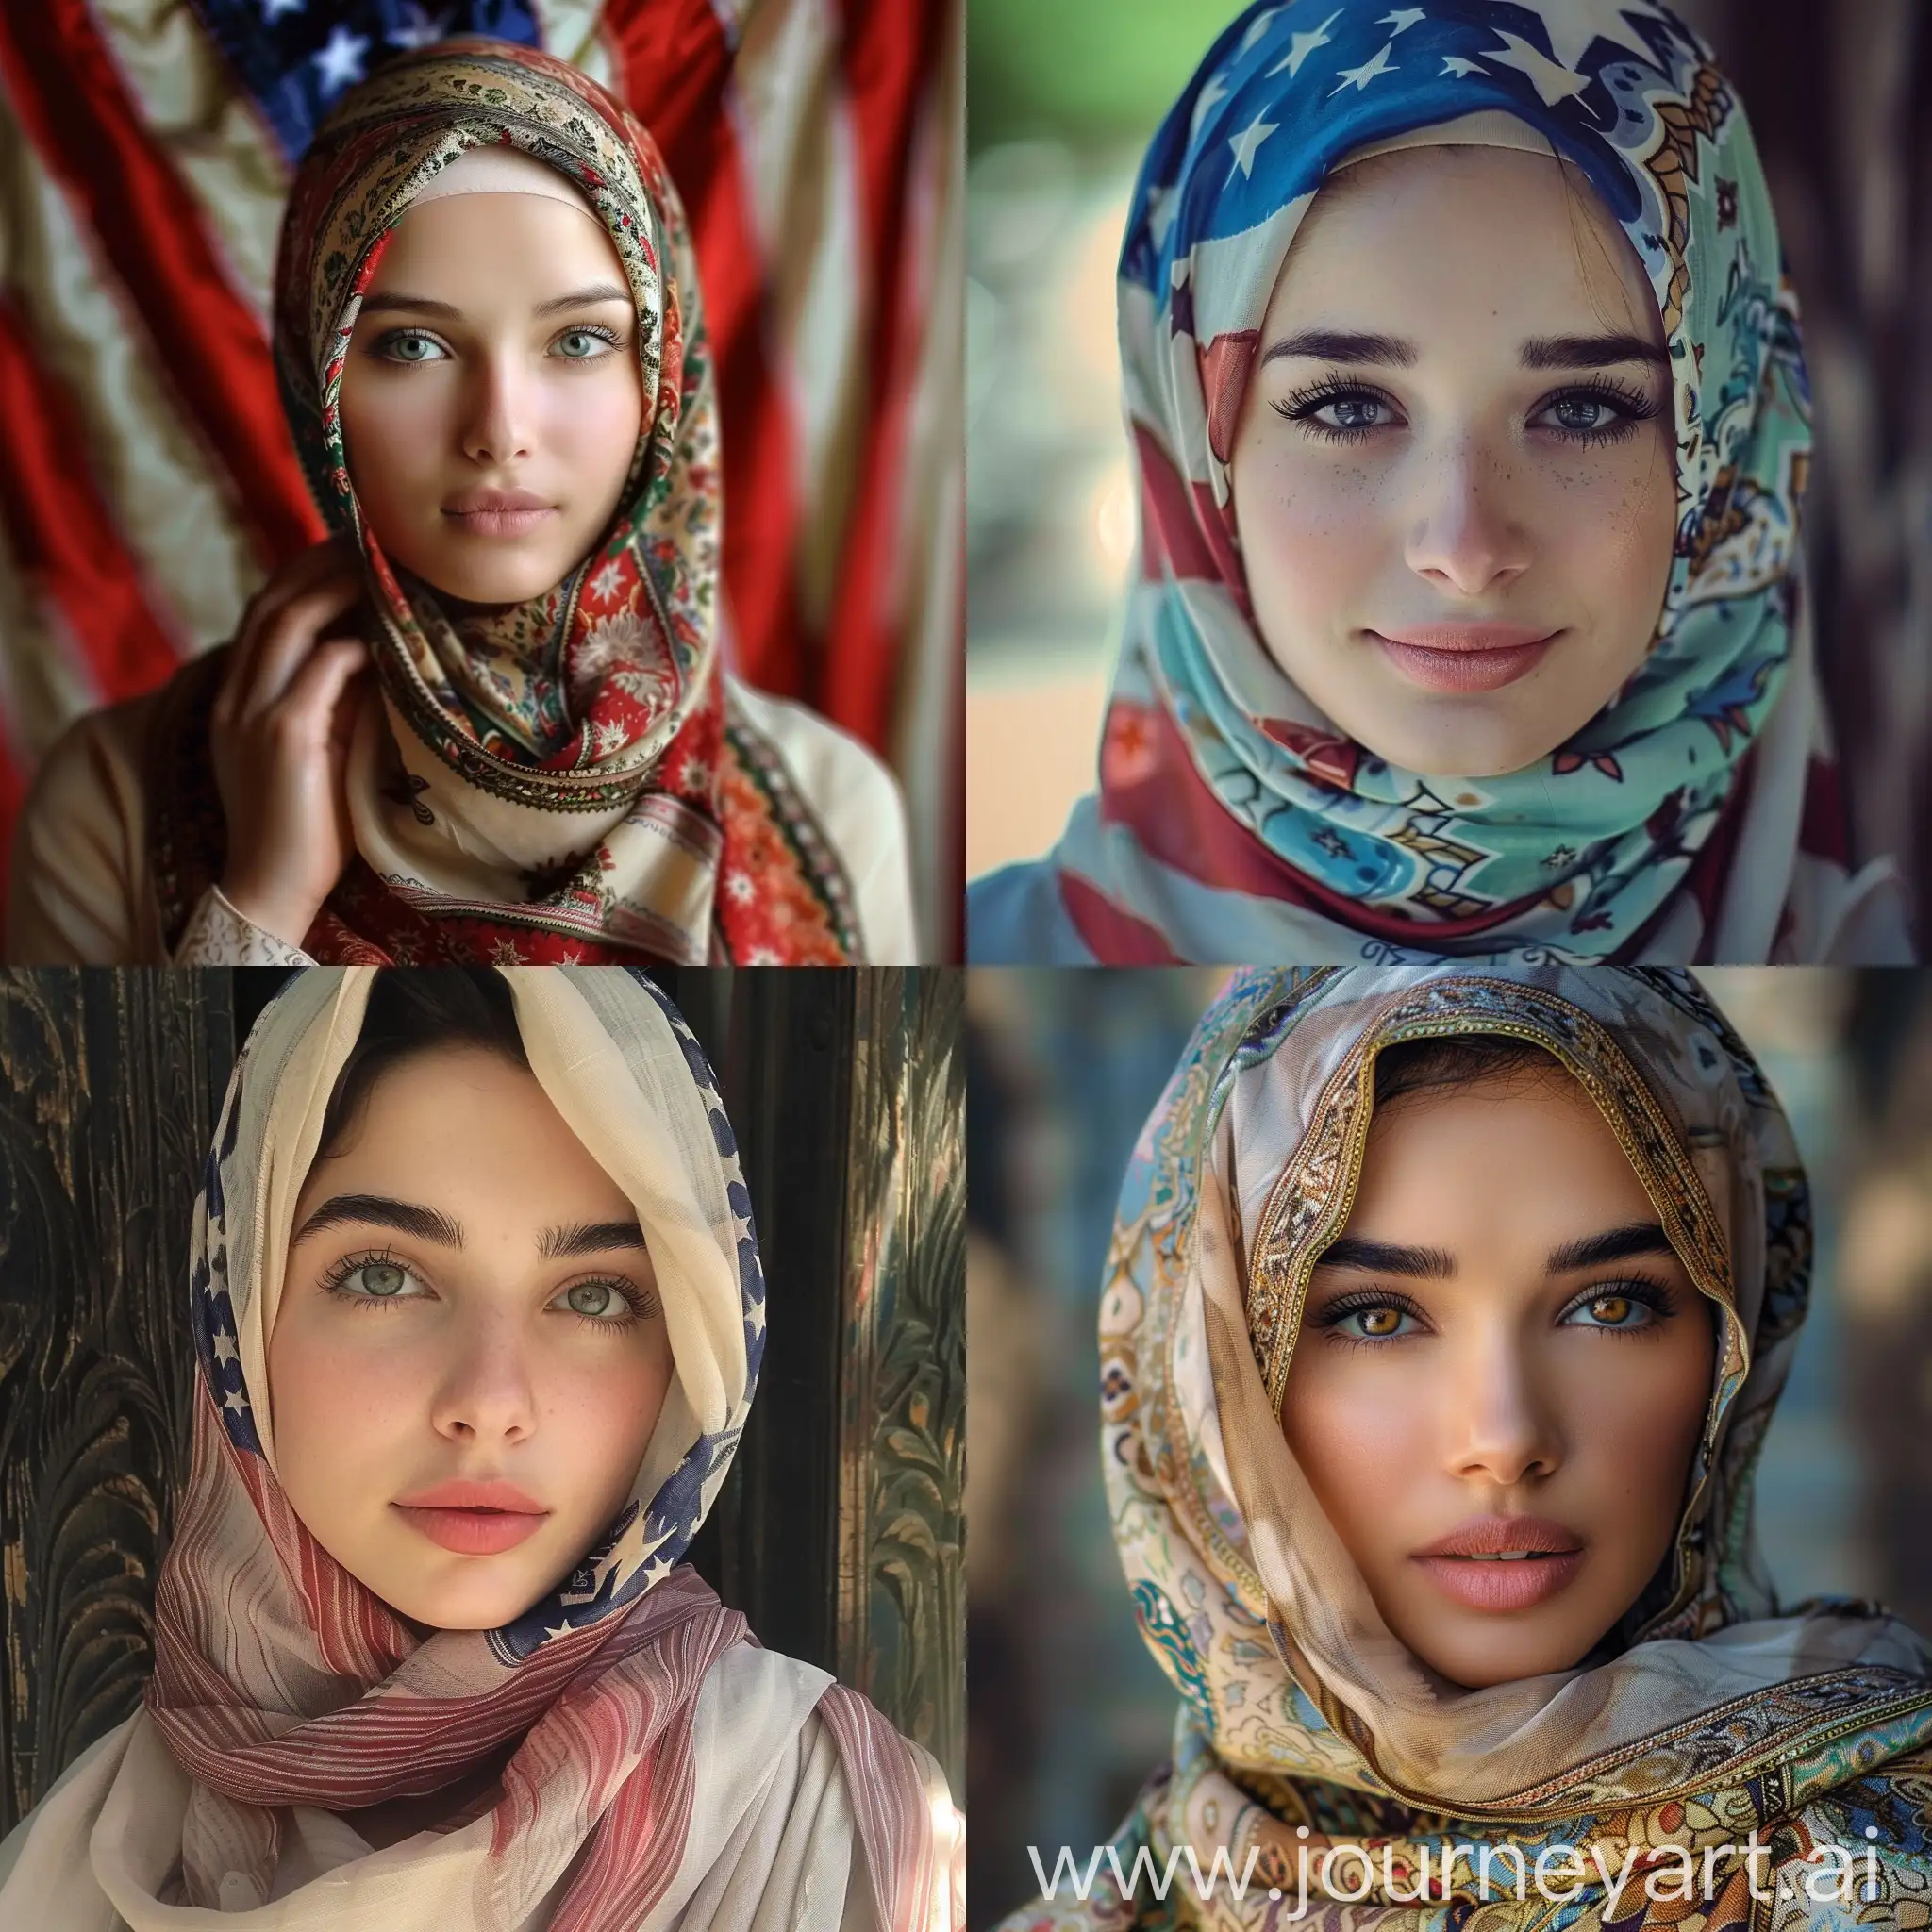 Halal-American-Girls-in-Stunning-Attire